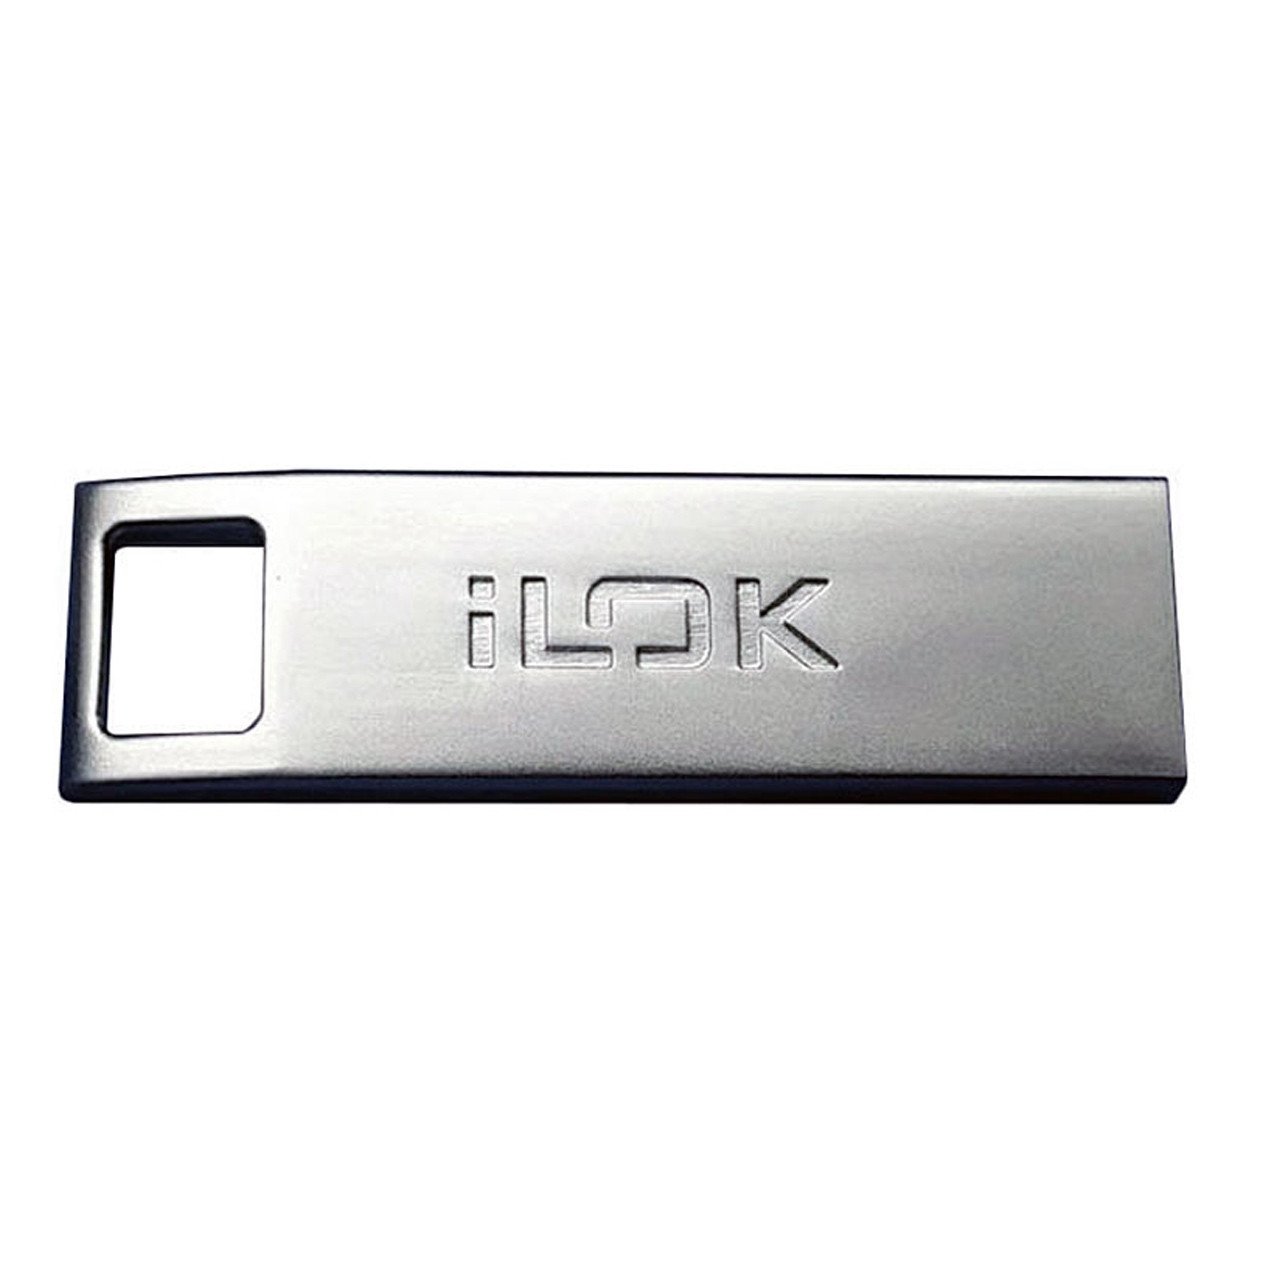 Keys/Dongles - Pace Ilok 3 USB License Dongle